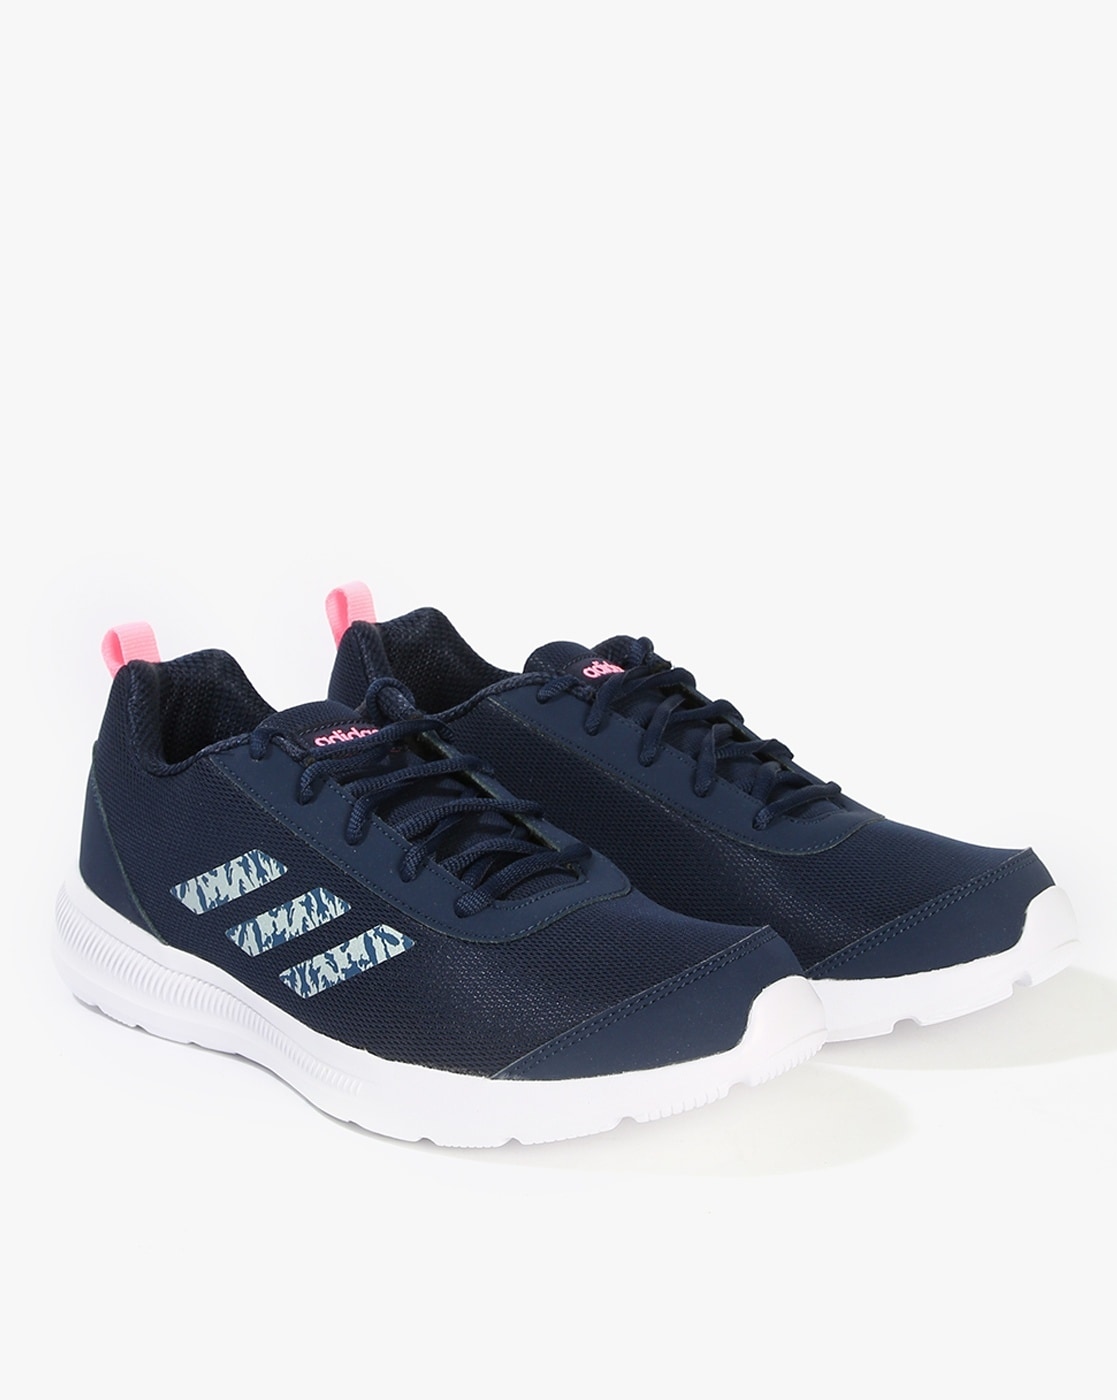 Adidas Men Furio 10 FtwwhtSilvmt Running Shoes6 UKIndia 3933 EU  CJ7991  Amazonin Fashion